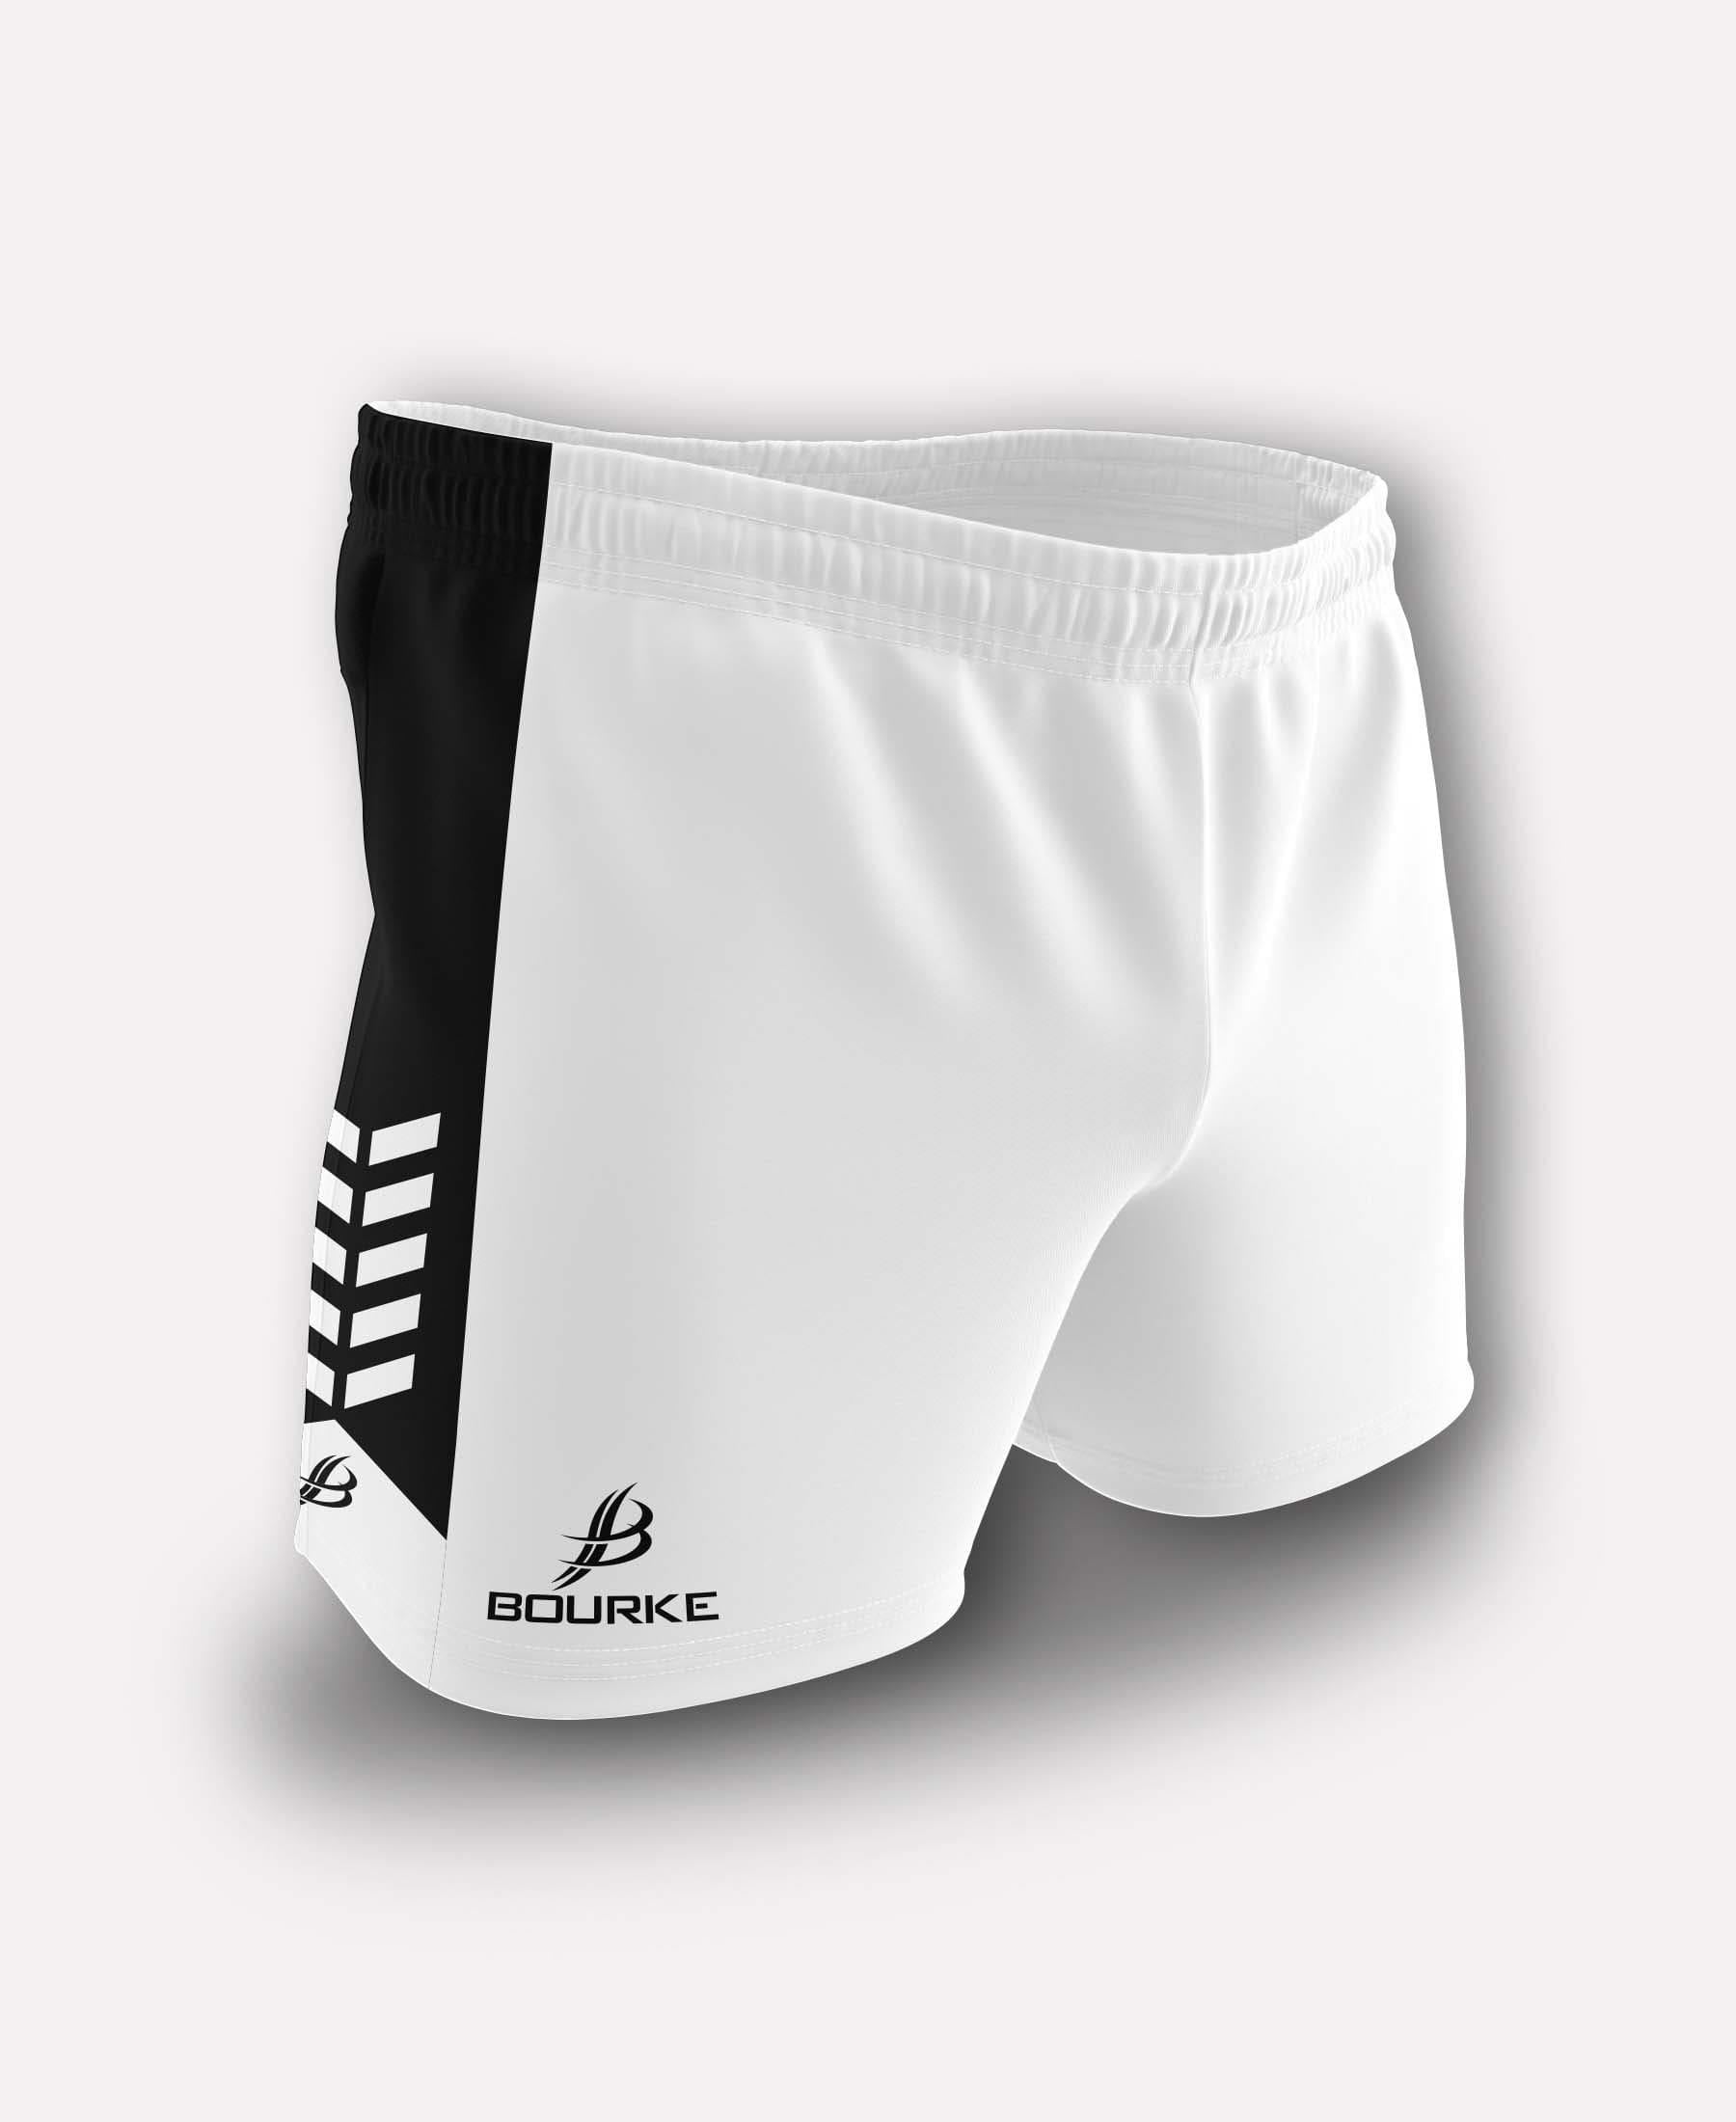 Chevron Adult Shorts (White/Black) - Bourke Sports Limited